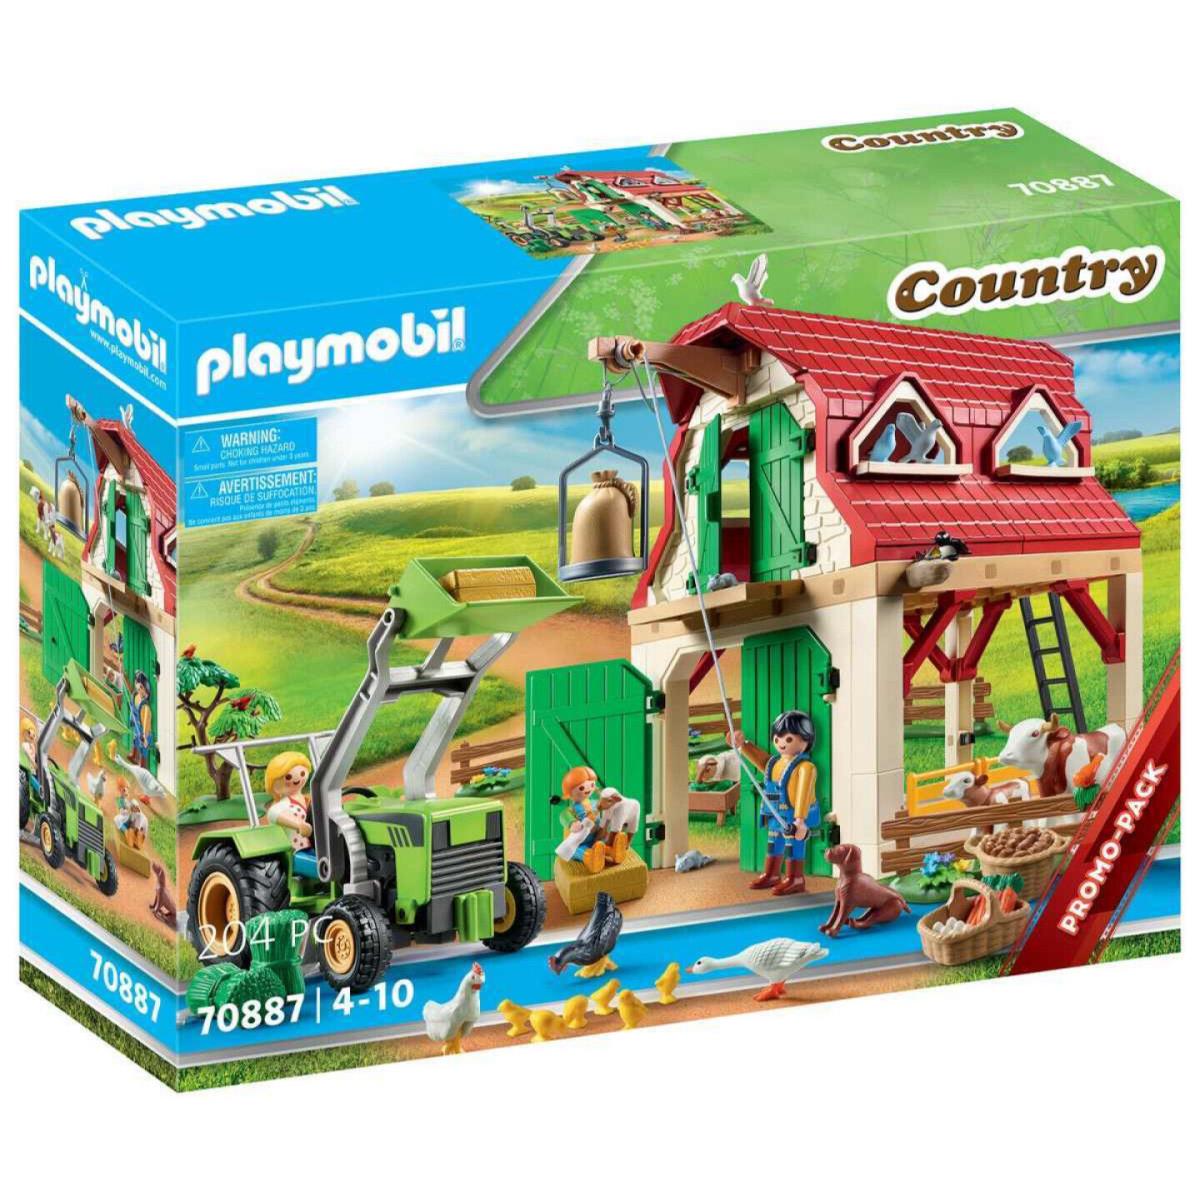 Playmobil 70887 Farm with Small Animals Play Set